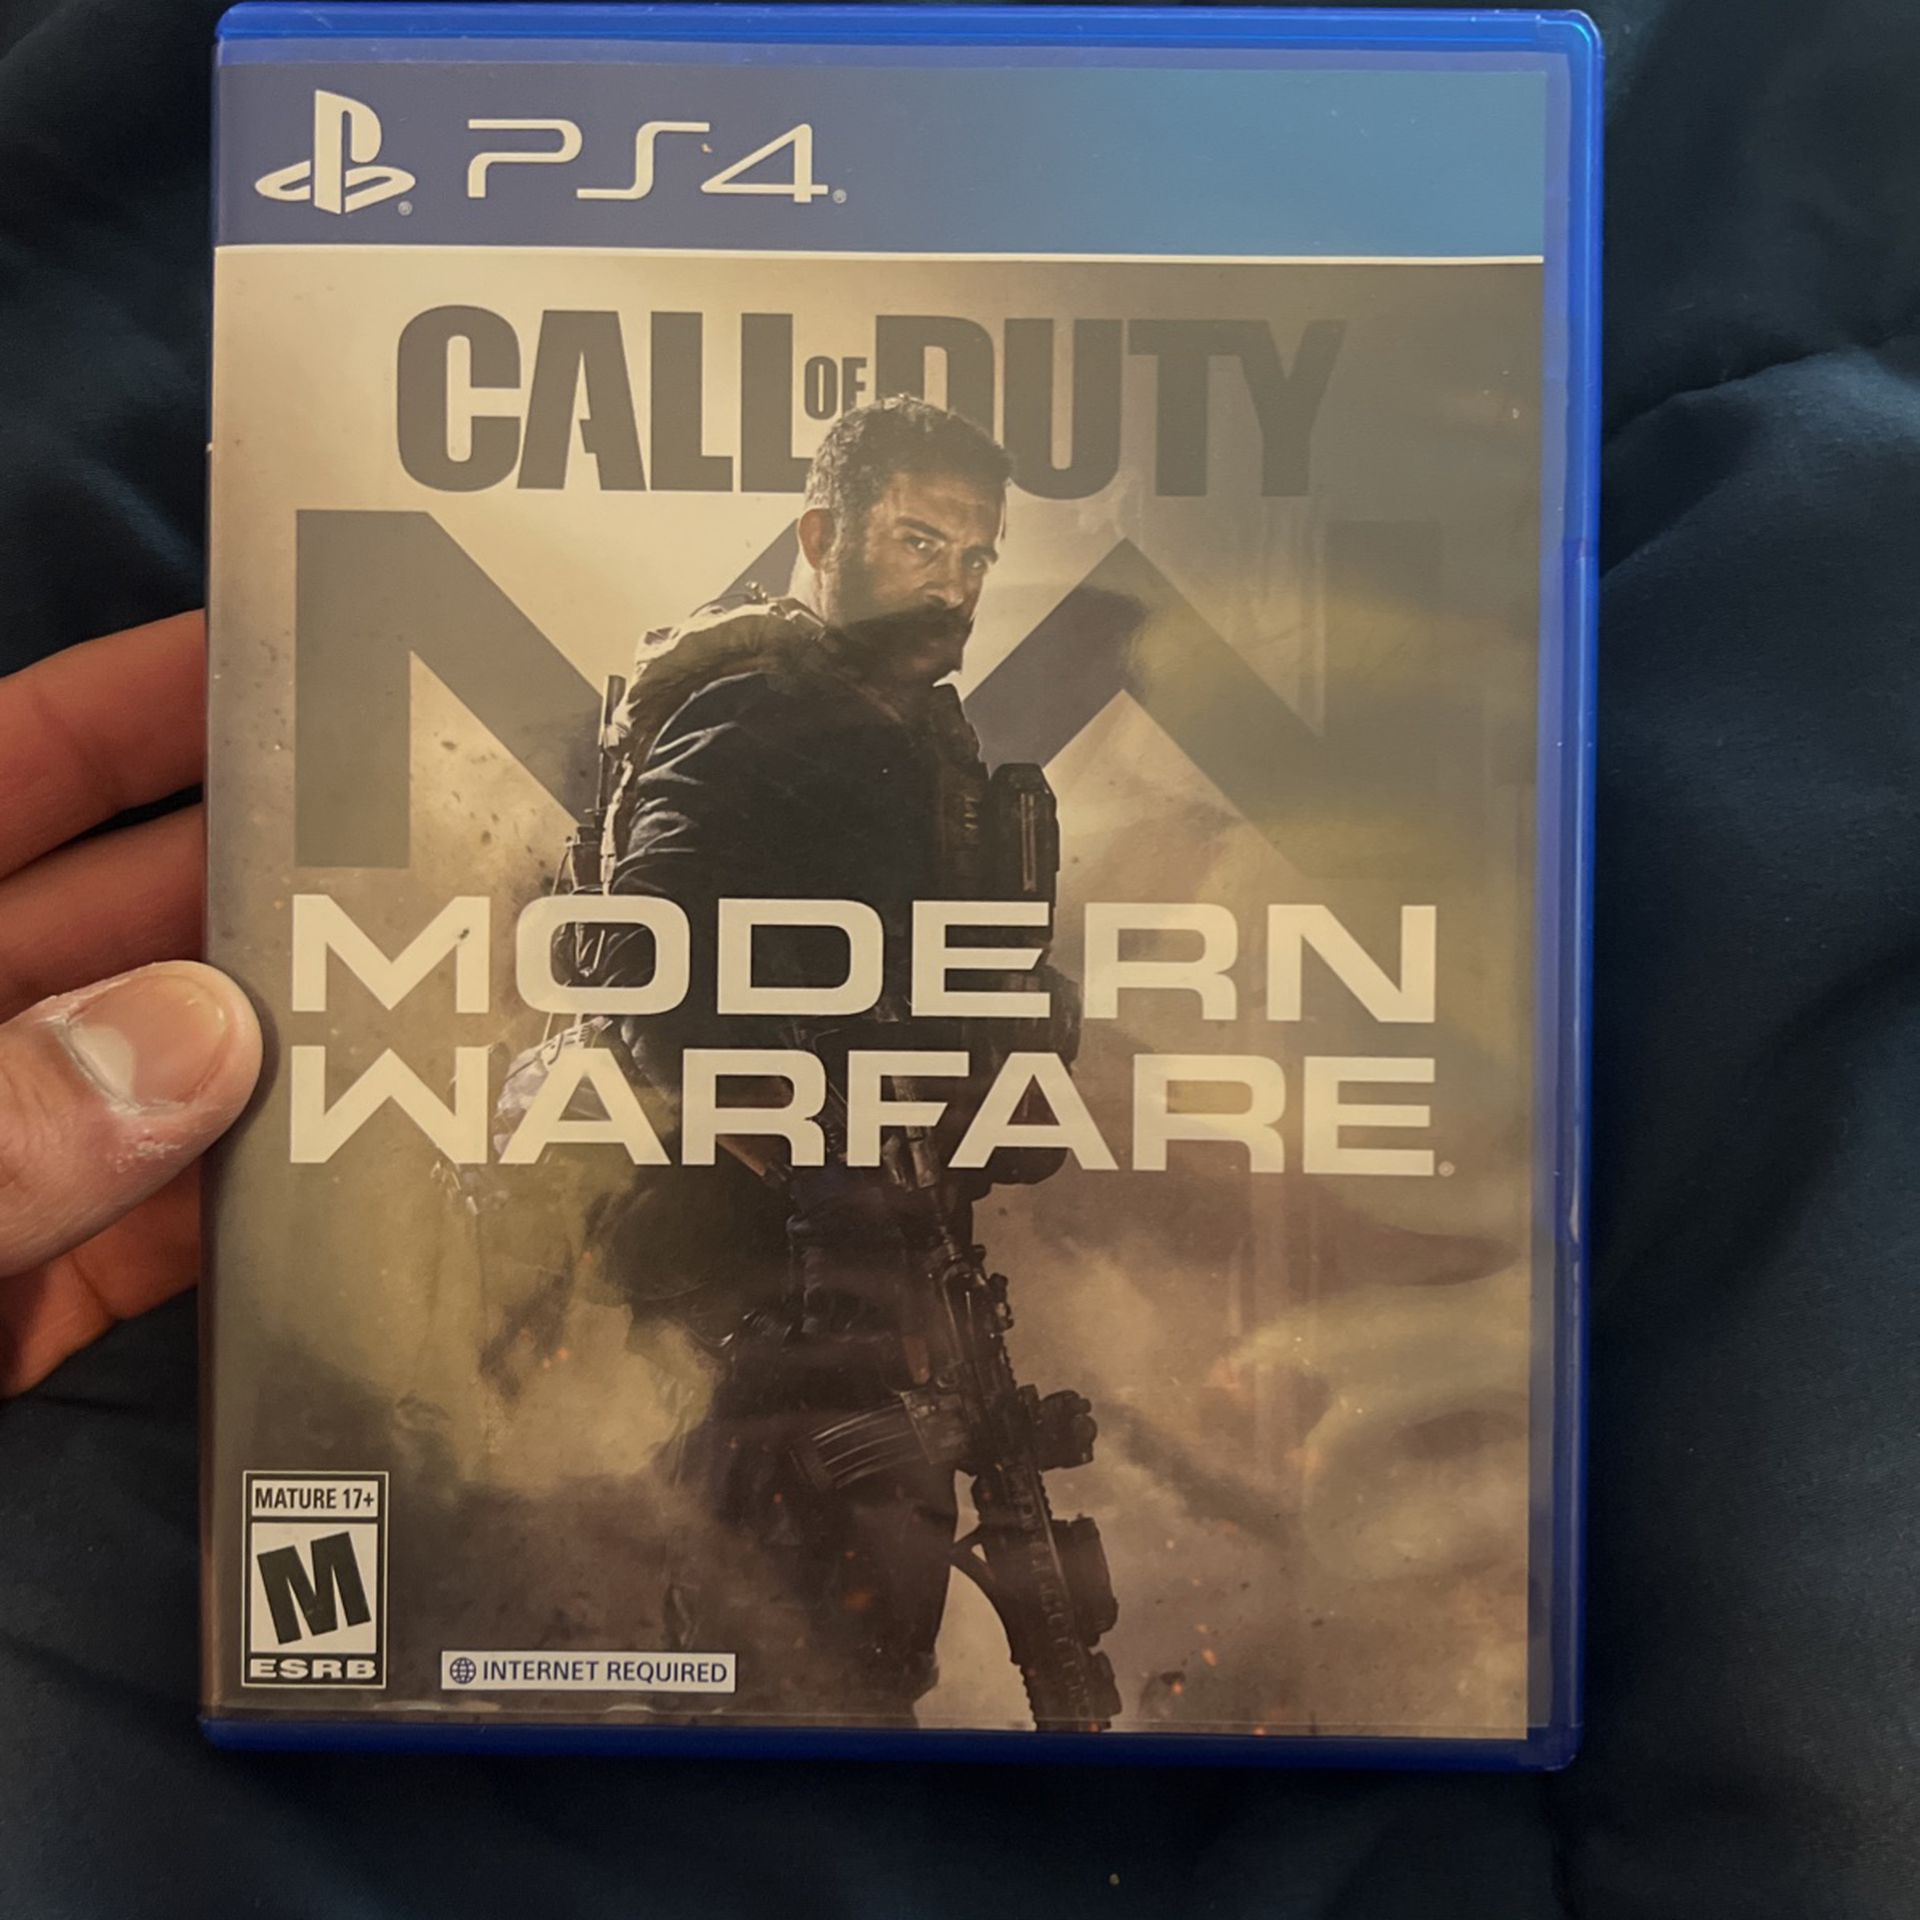 Call of Duty: Advanced Warfare (PS4)